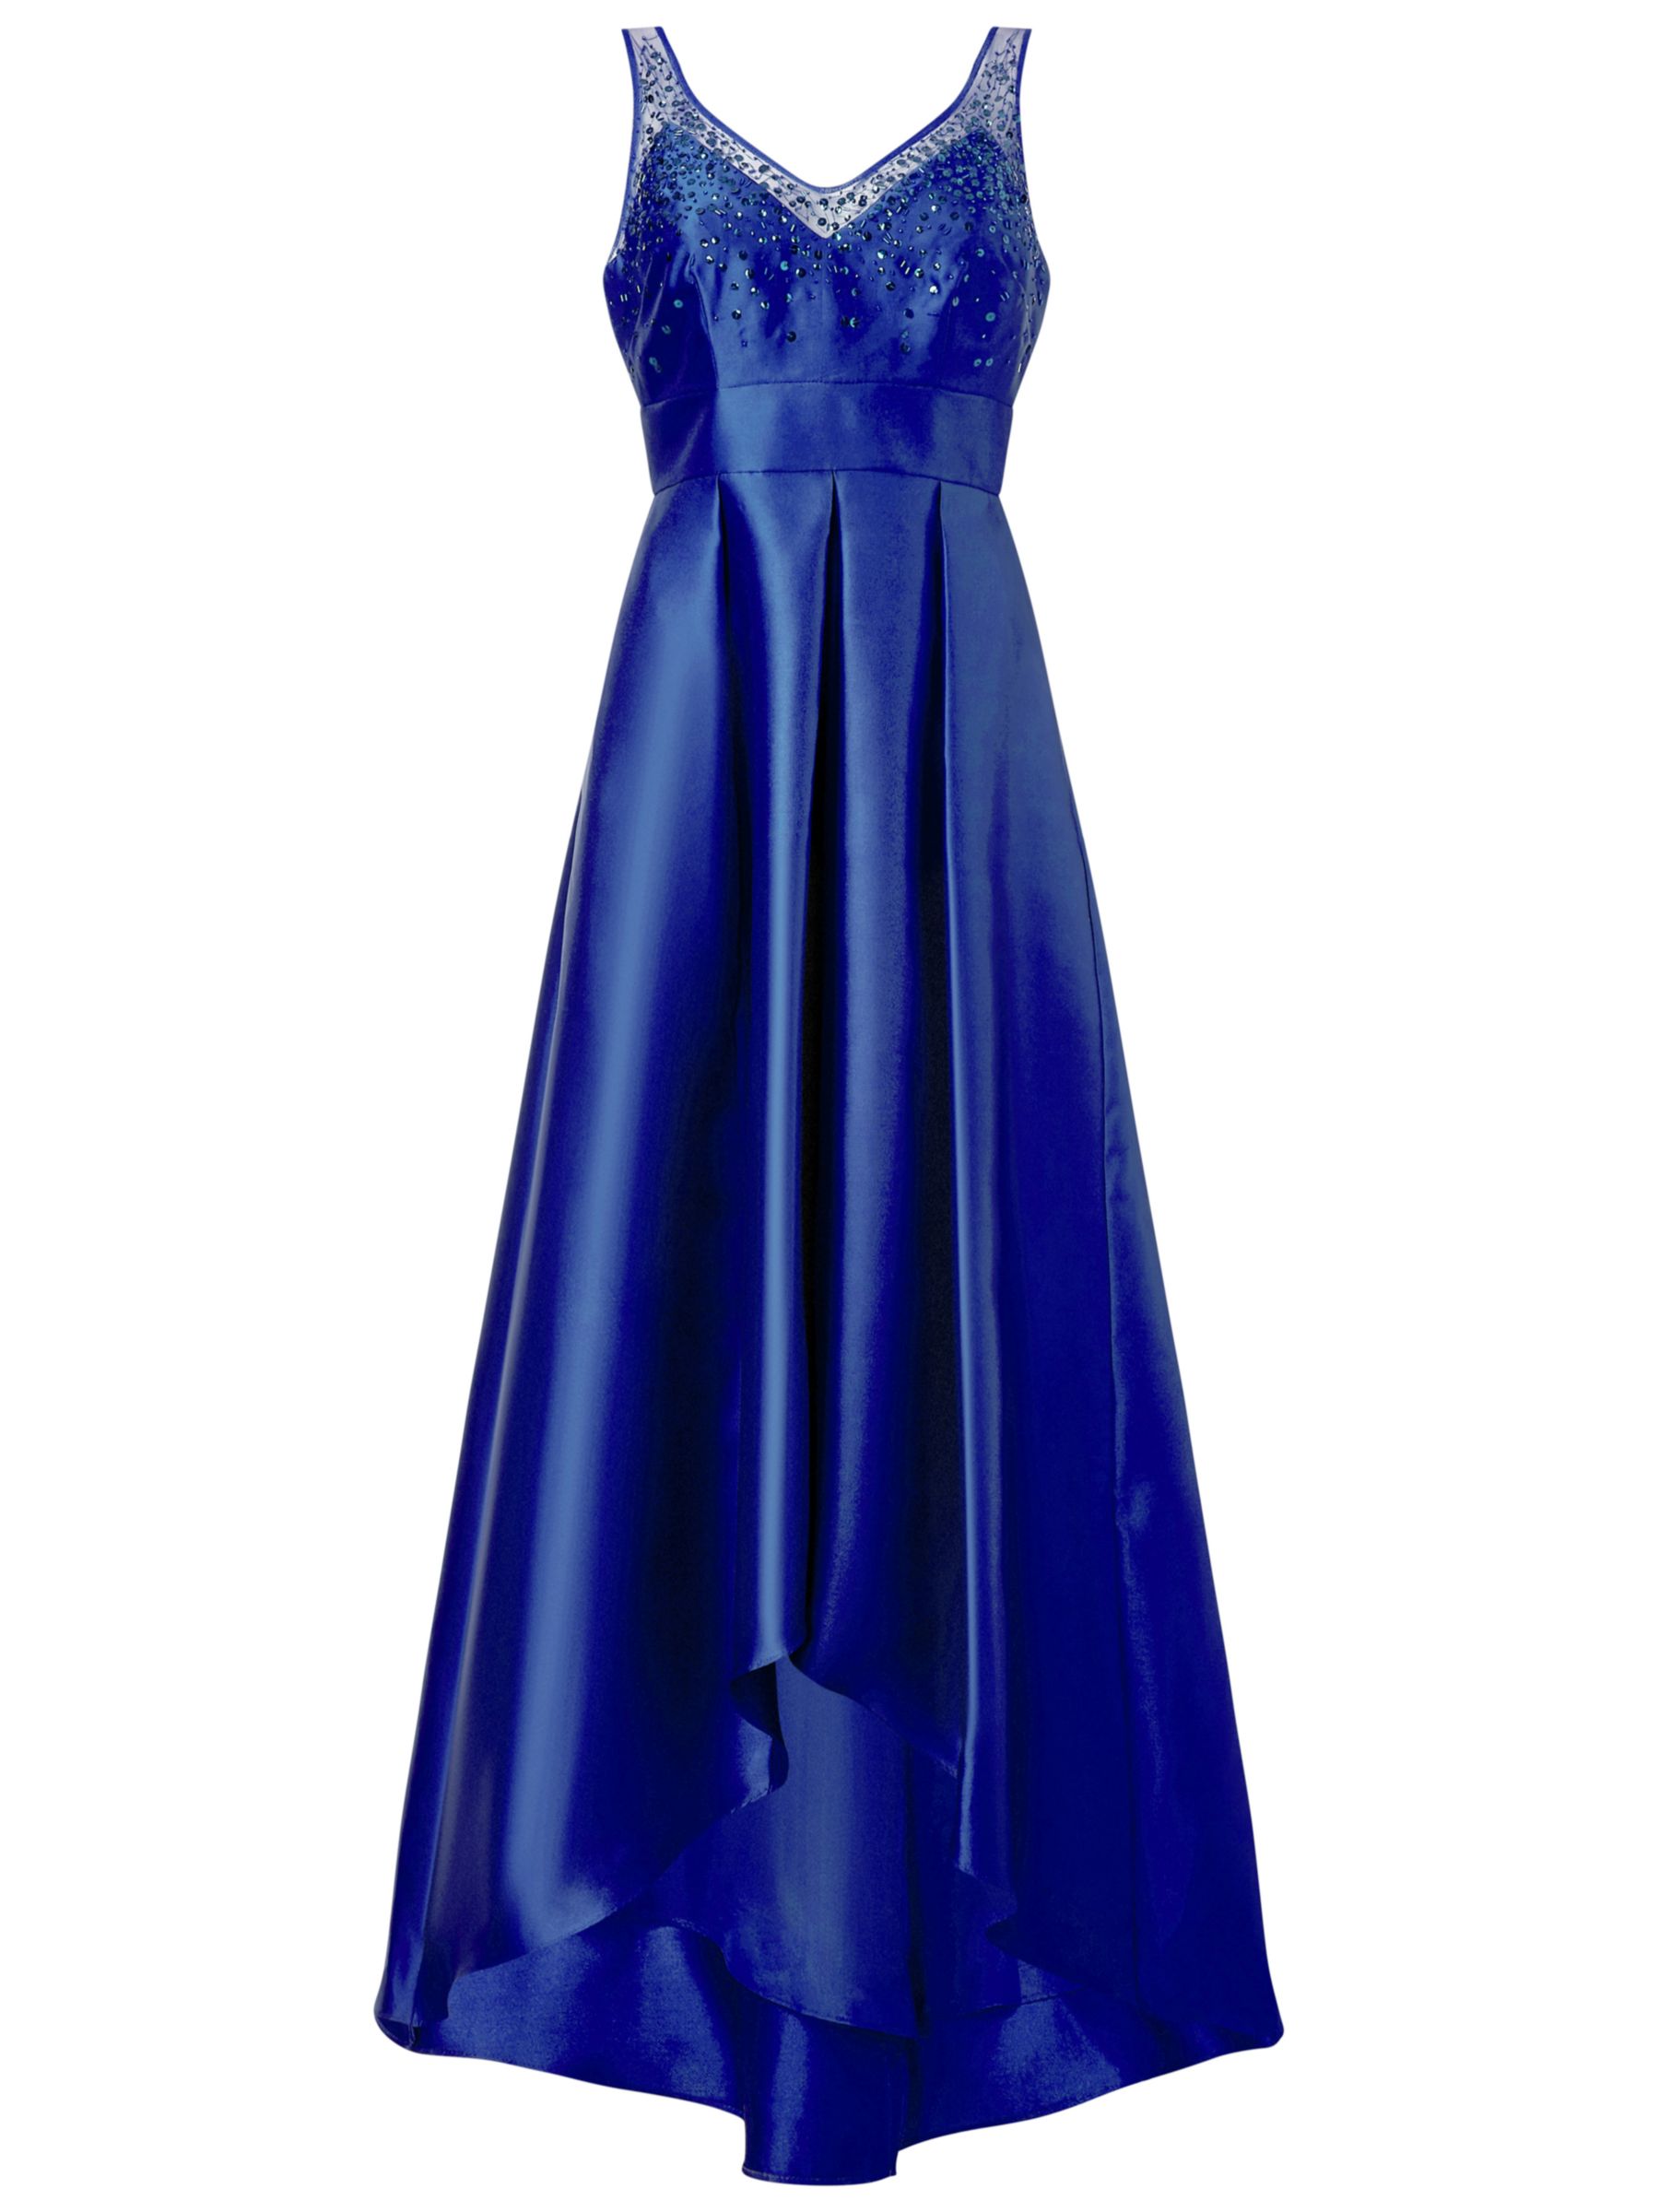 Adrianna Papell Mikado Illusion Dress, Neptune Blue